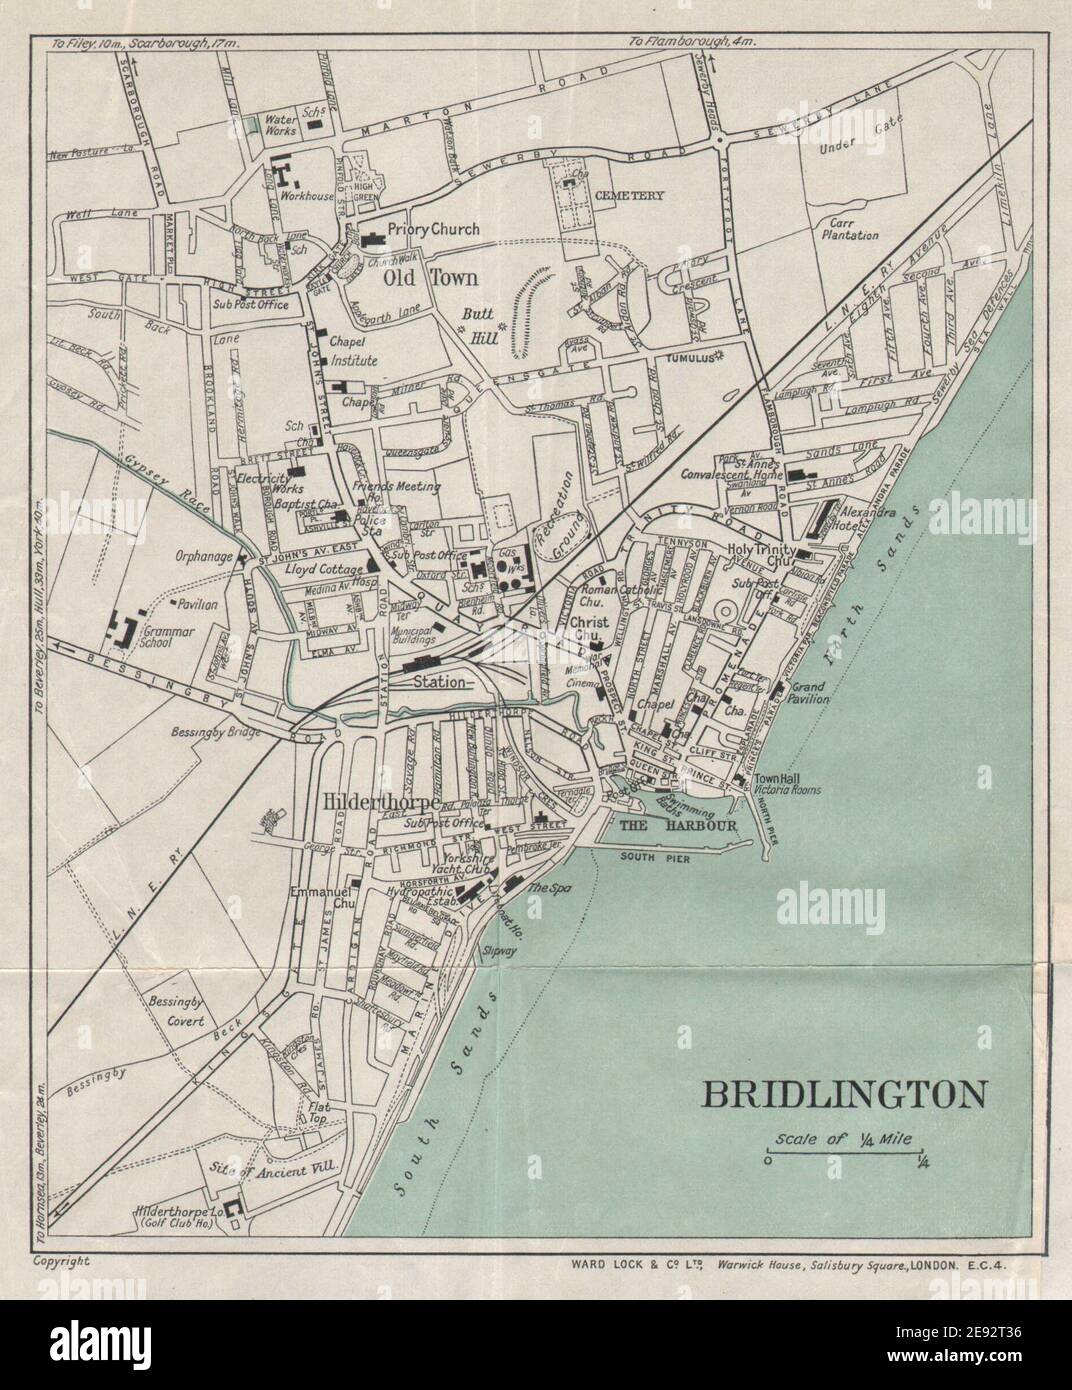 BRIDLINGTON vintage tourist town city plan. Yorkshire. WARD LOCK 1935 old map Stock Photo